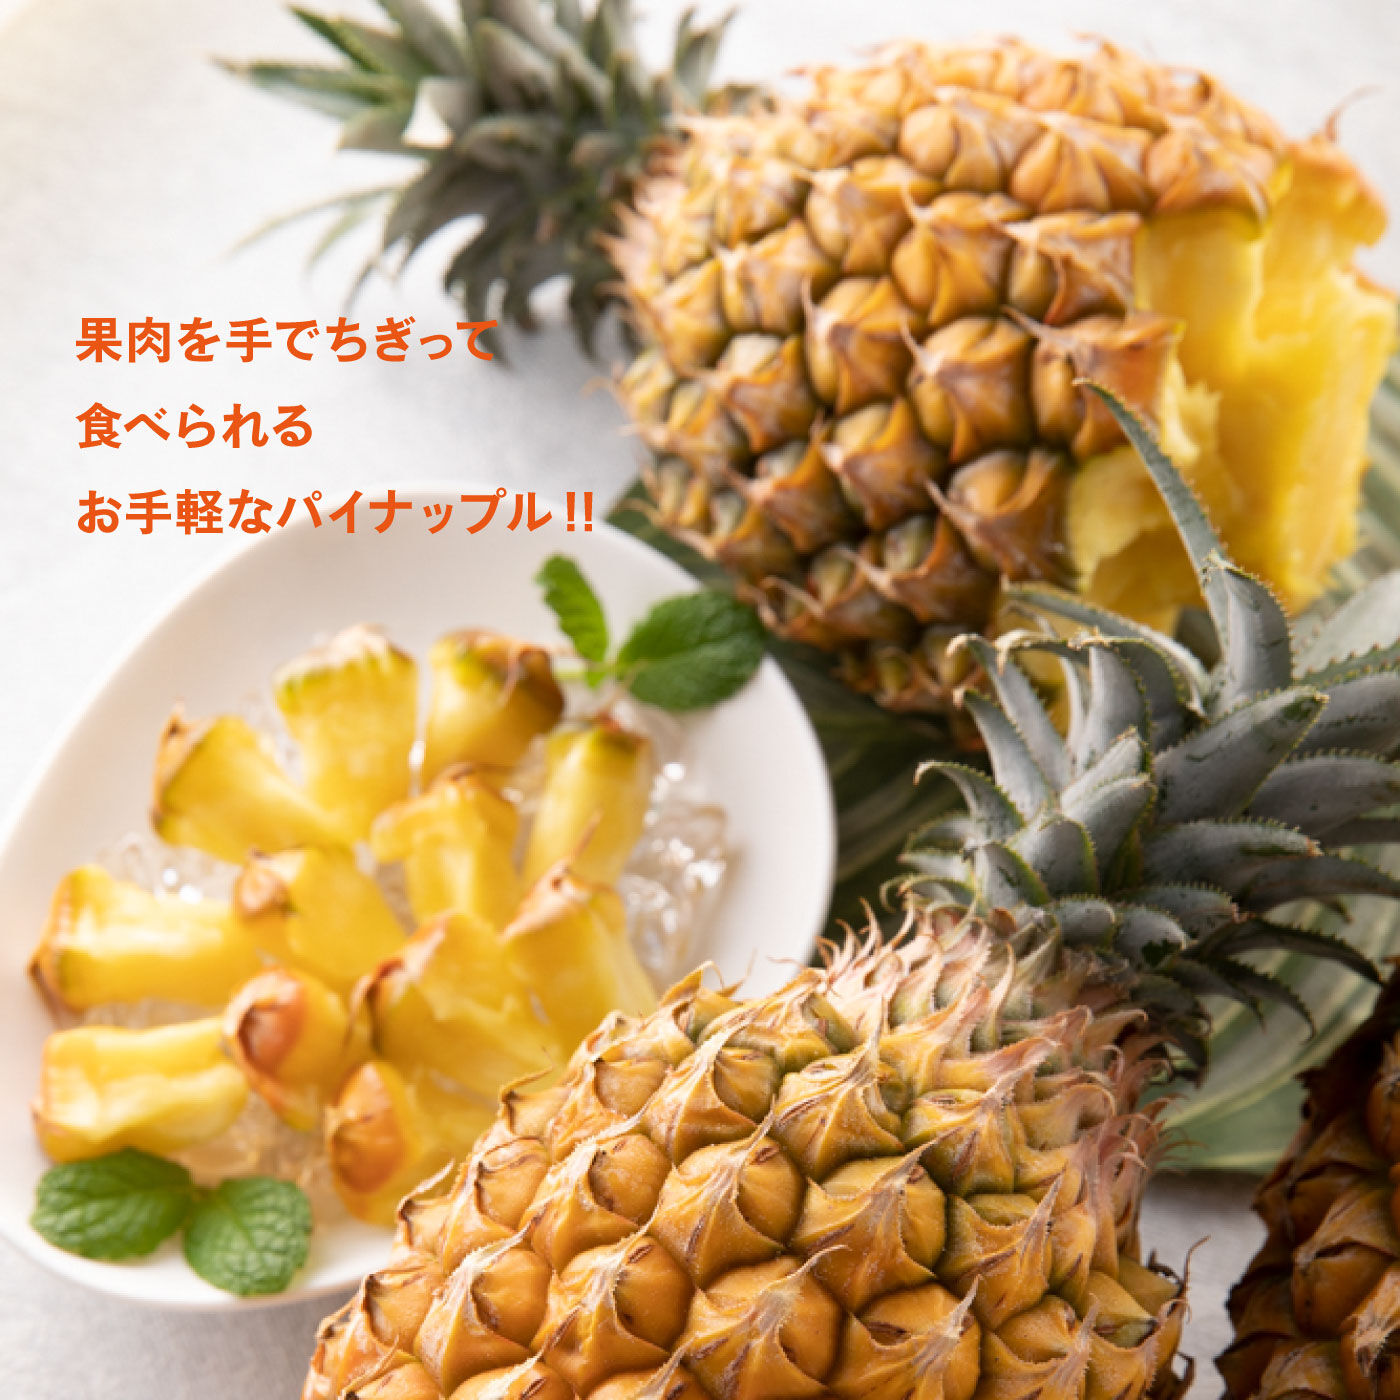 FP産地直送マルシェ|【予約限定・締切5月26日】沖縄の甘い香りをお届け！スナックパイナップル２個セット